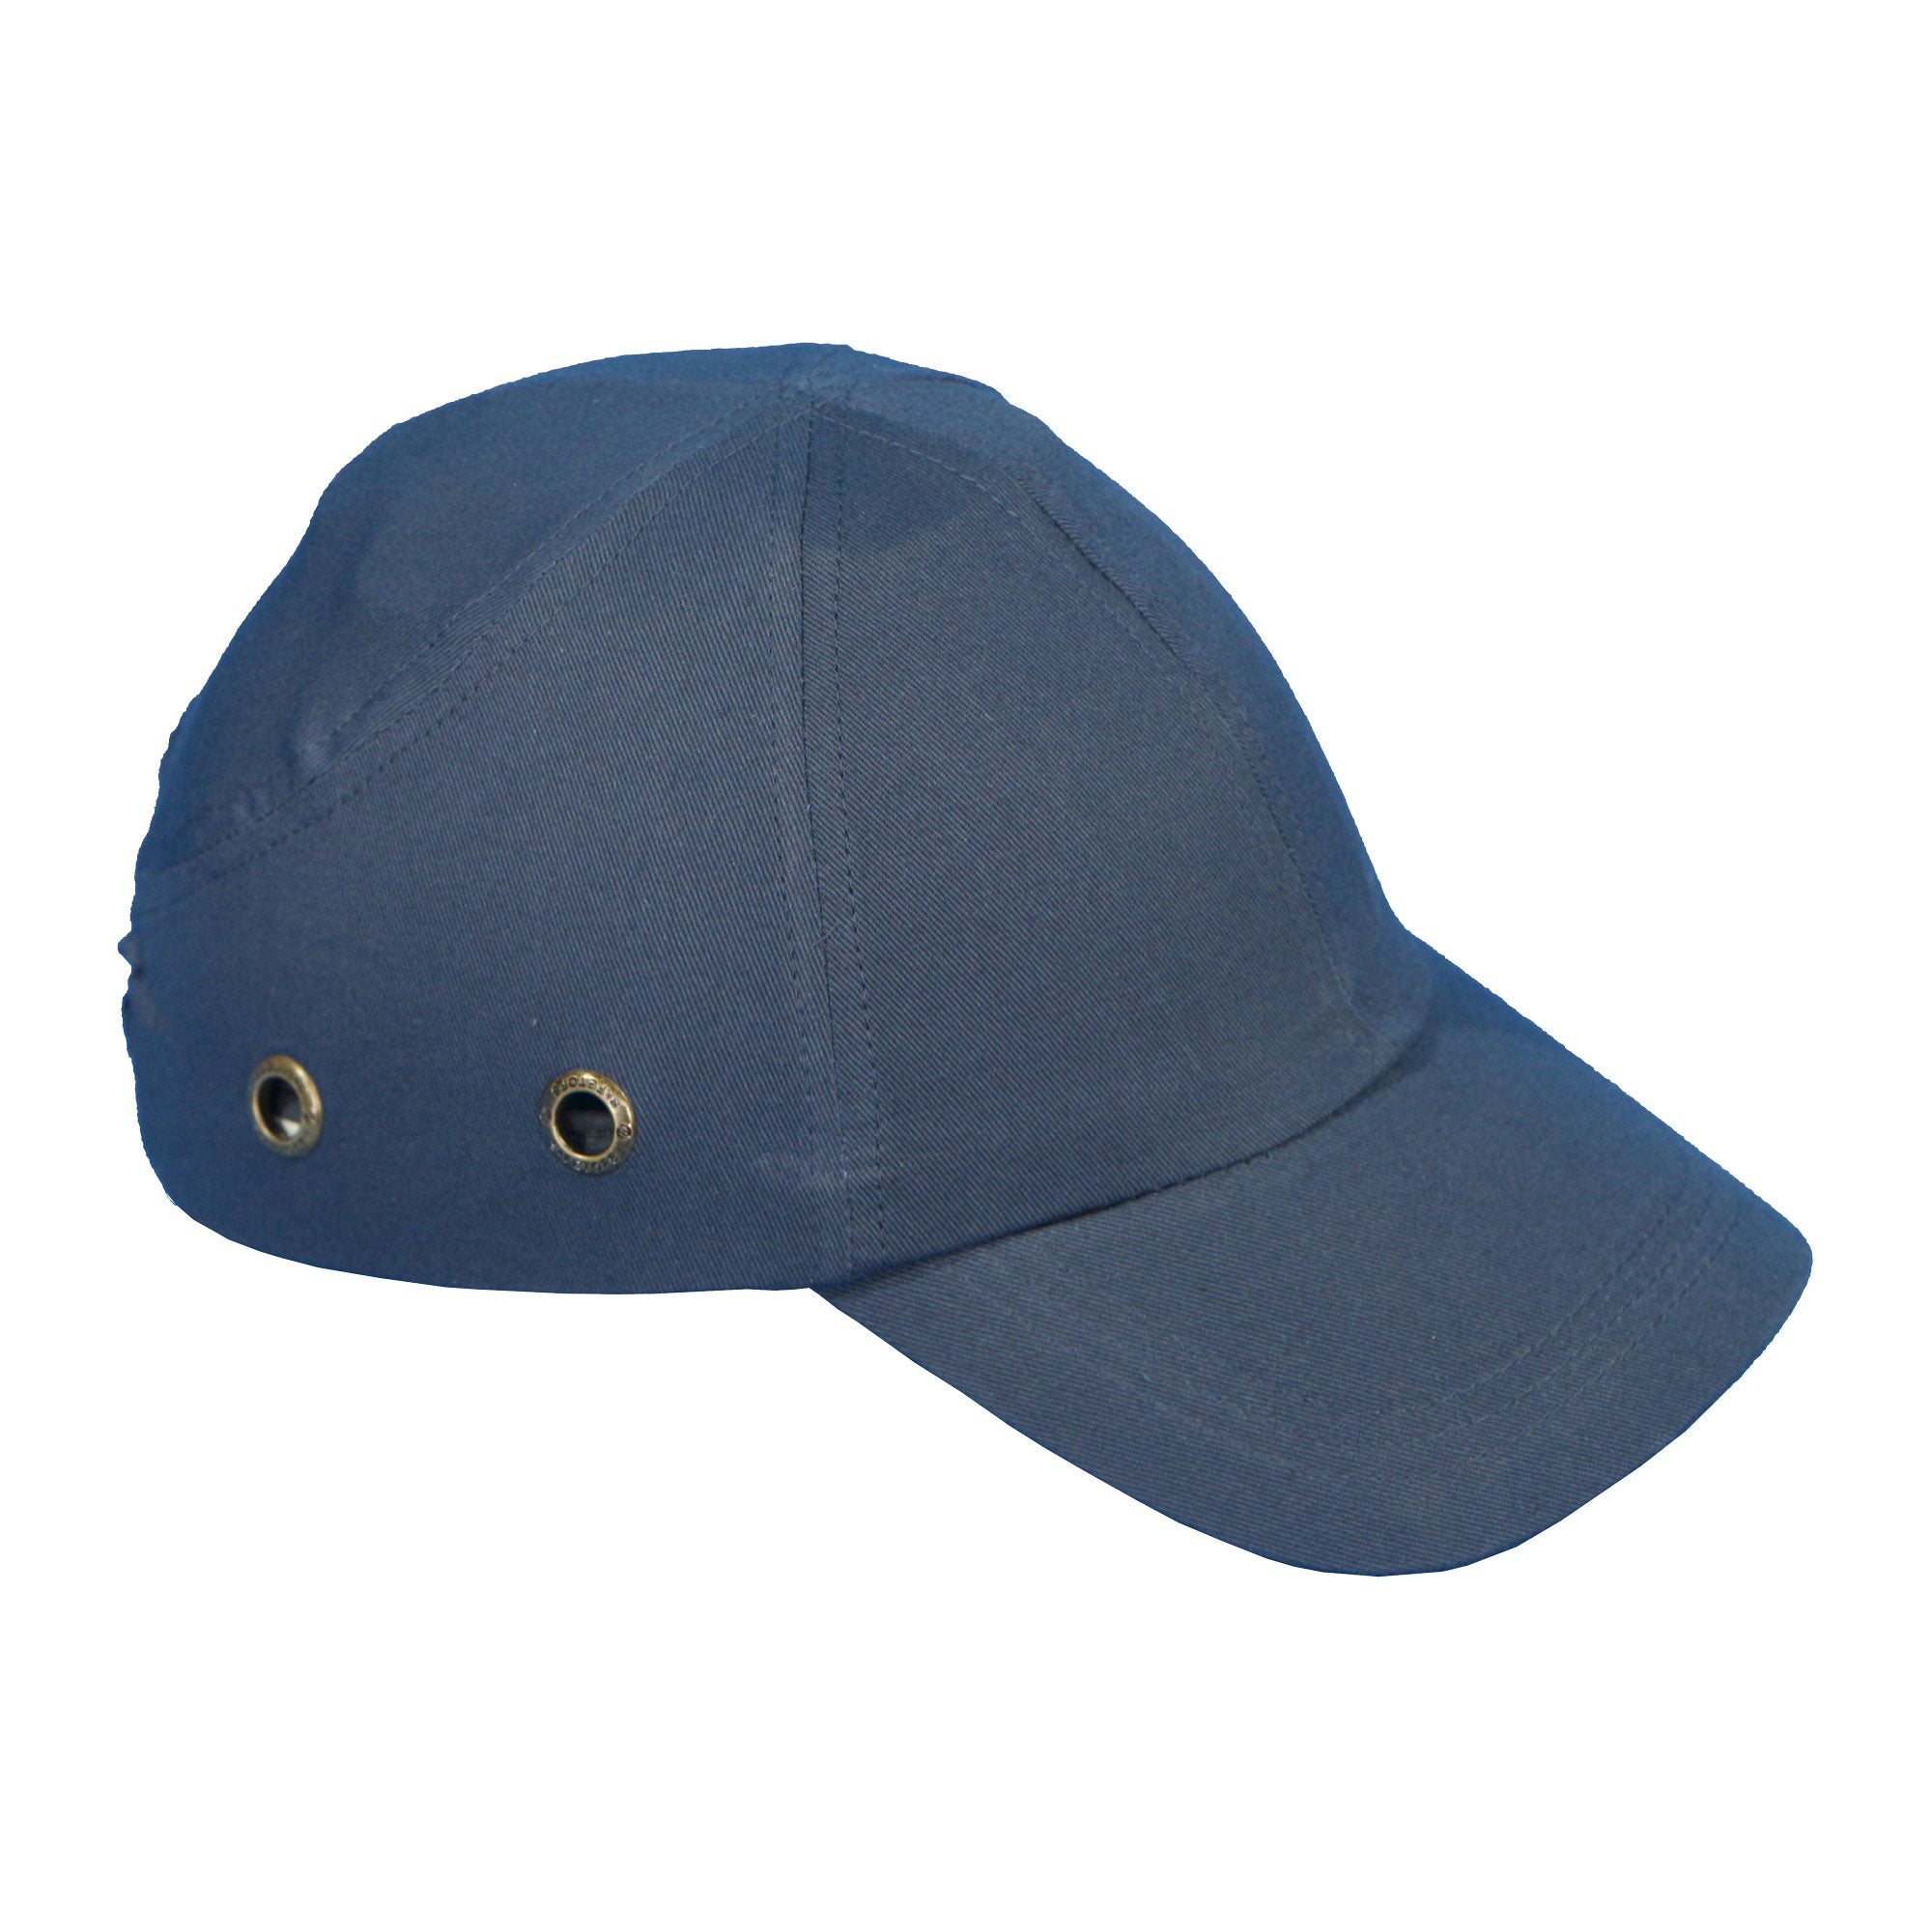 Pinnacle Hard Hat Bumper Cap - Safeguarding Your Headgear from External Wear and Tear